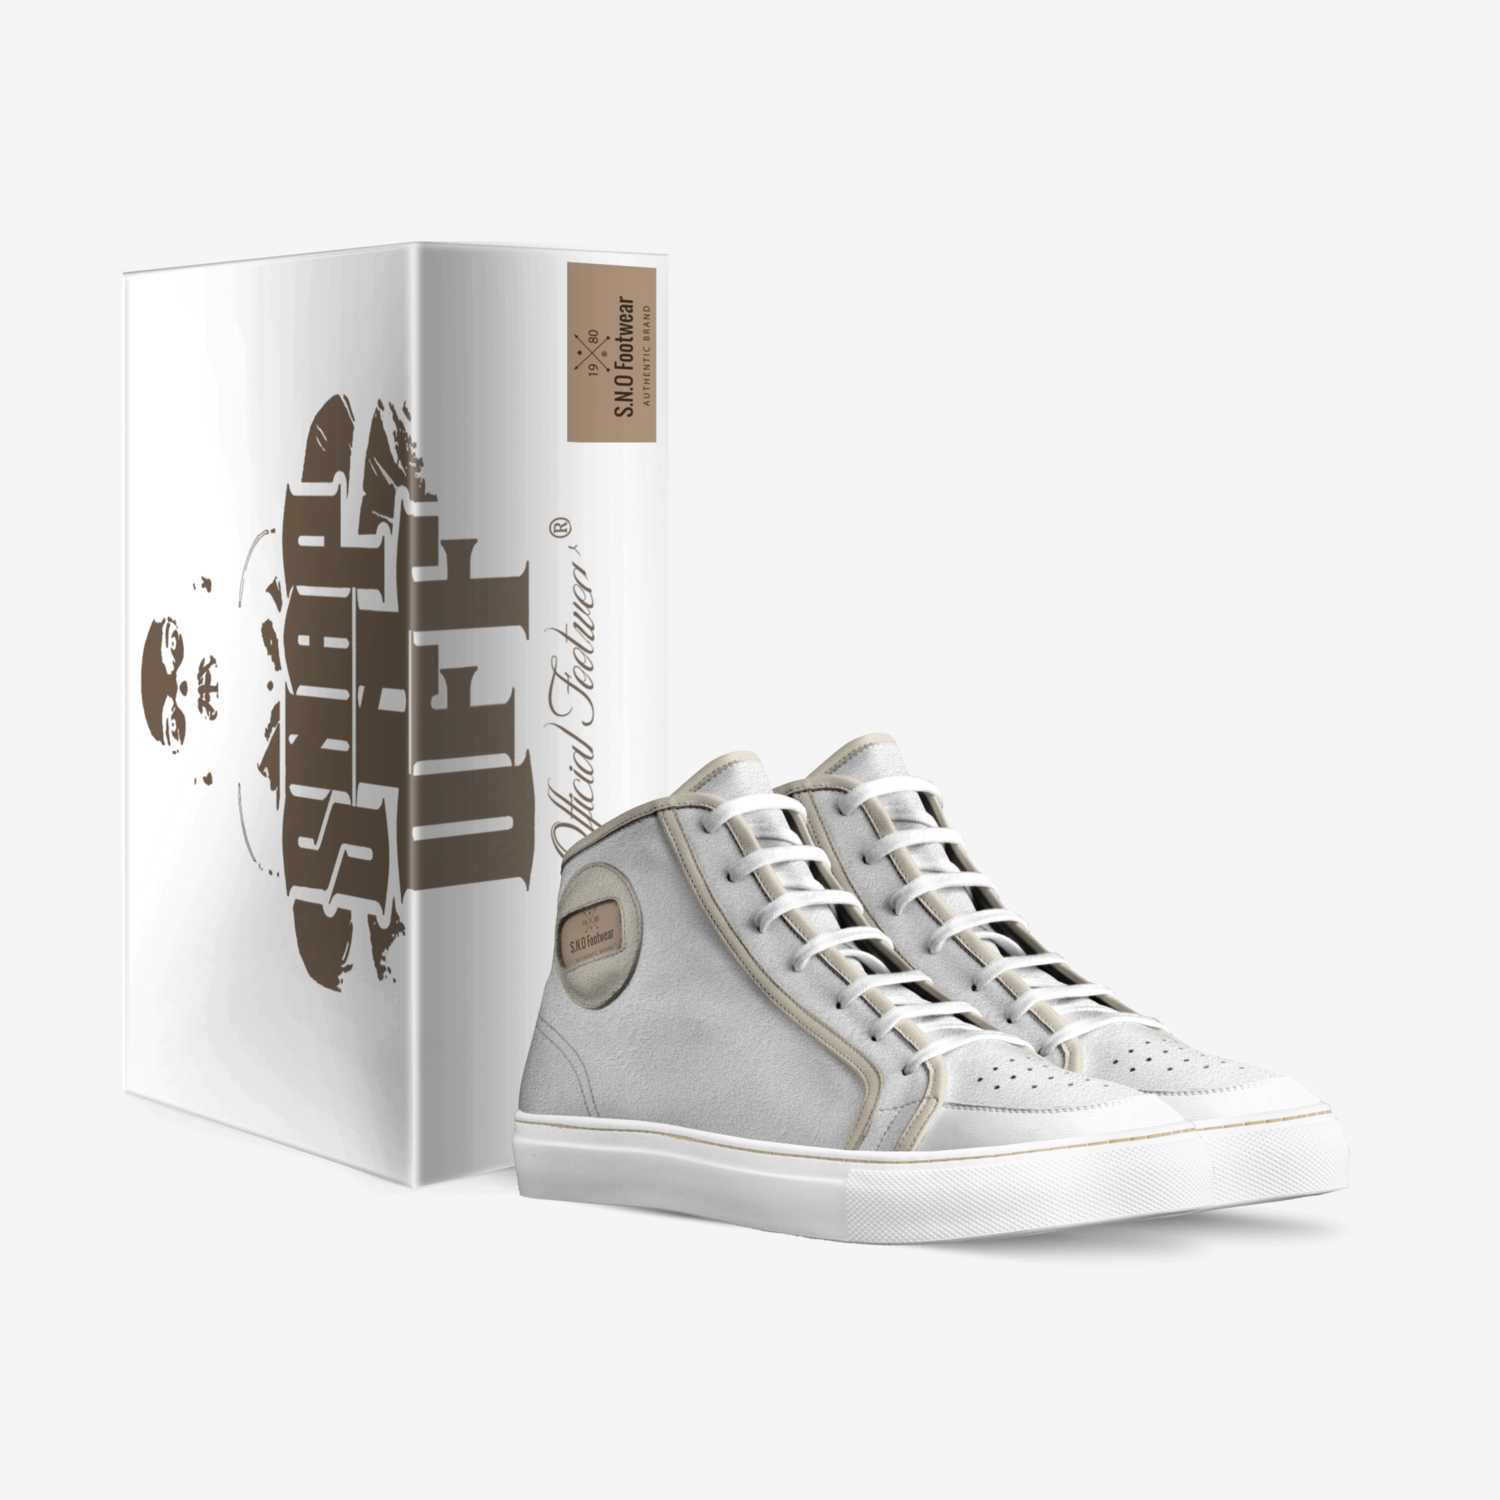 S.N.O Footwear  custom made in Italy shoes by Zeanetta Bradley | Box view